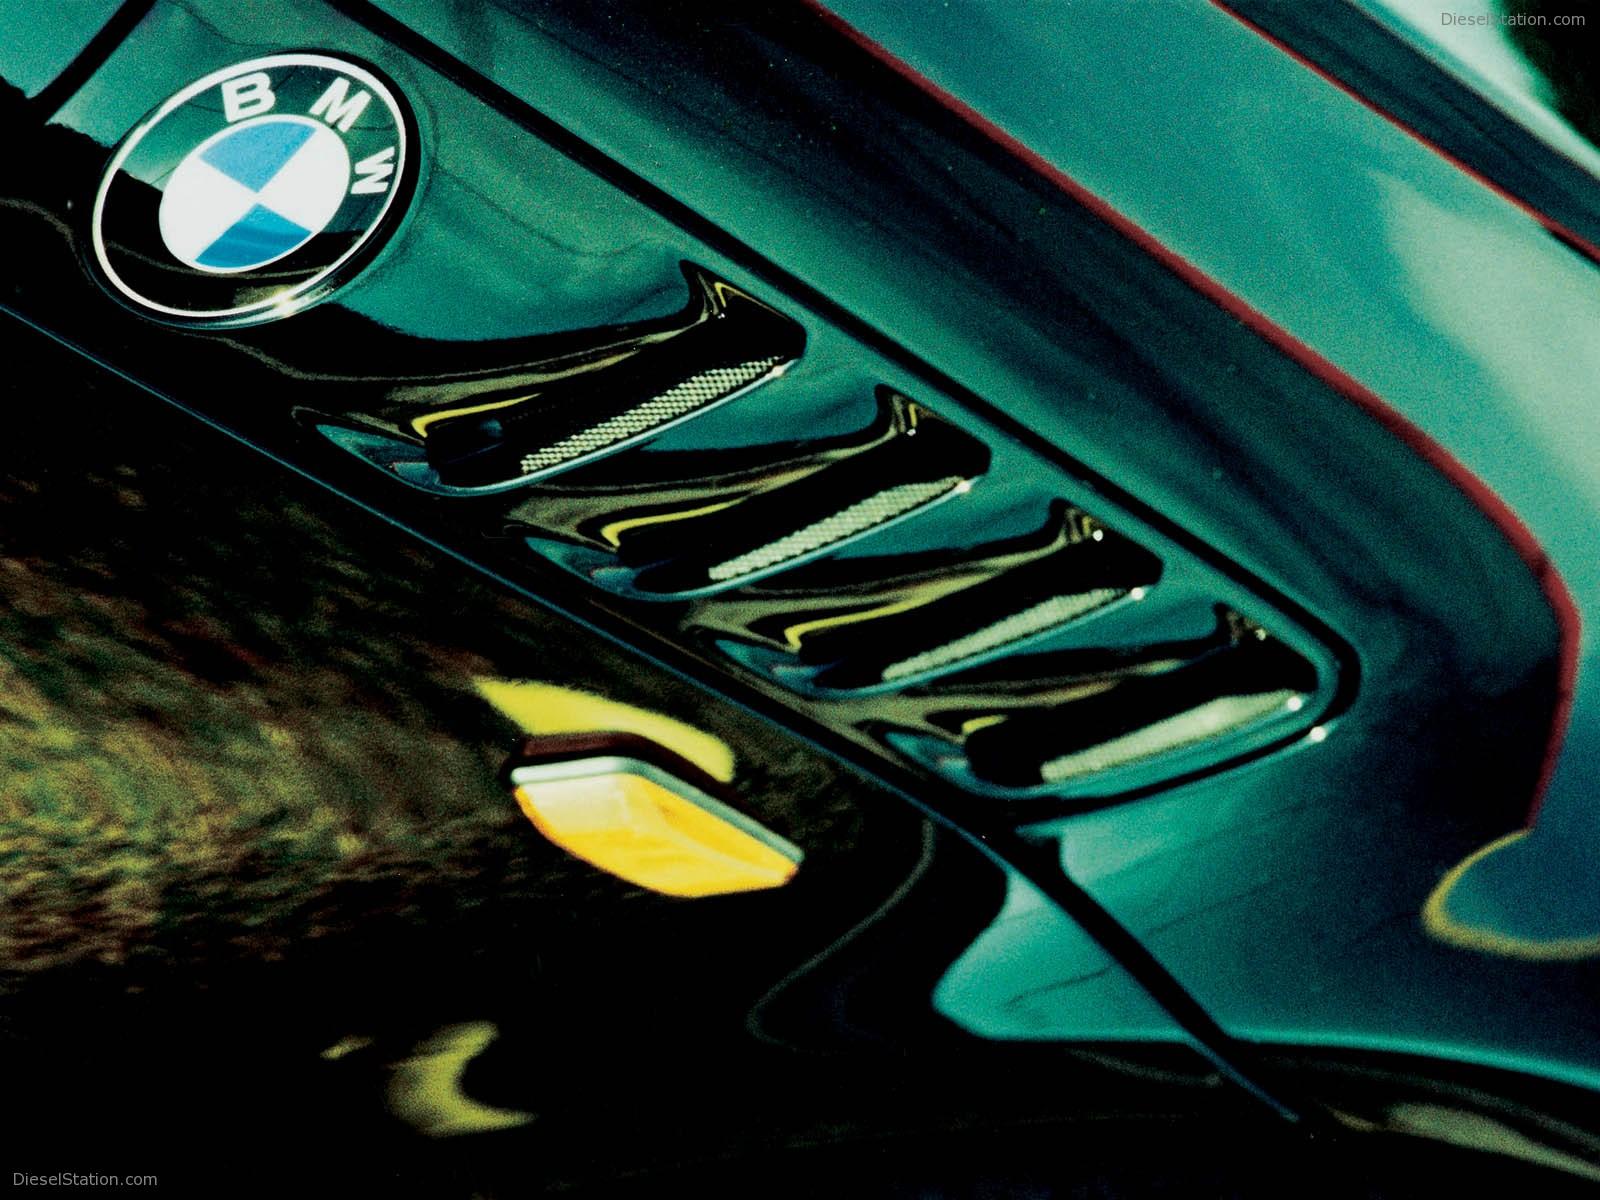 BMW Z3 (1996) Exotic Car Wallpaper of 21, Diesel Station